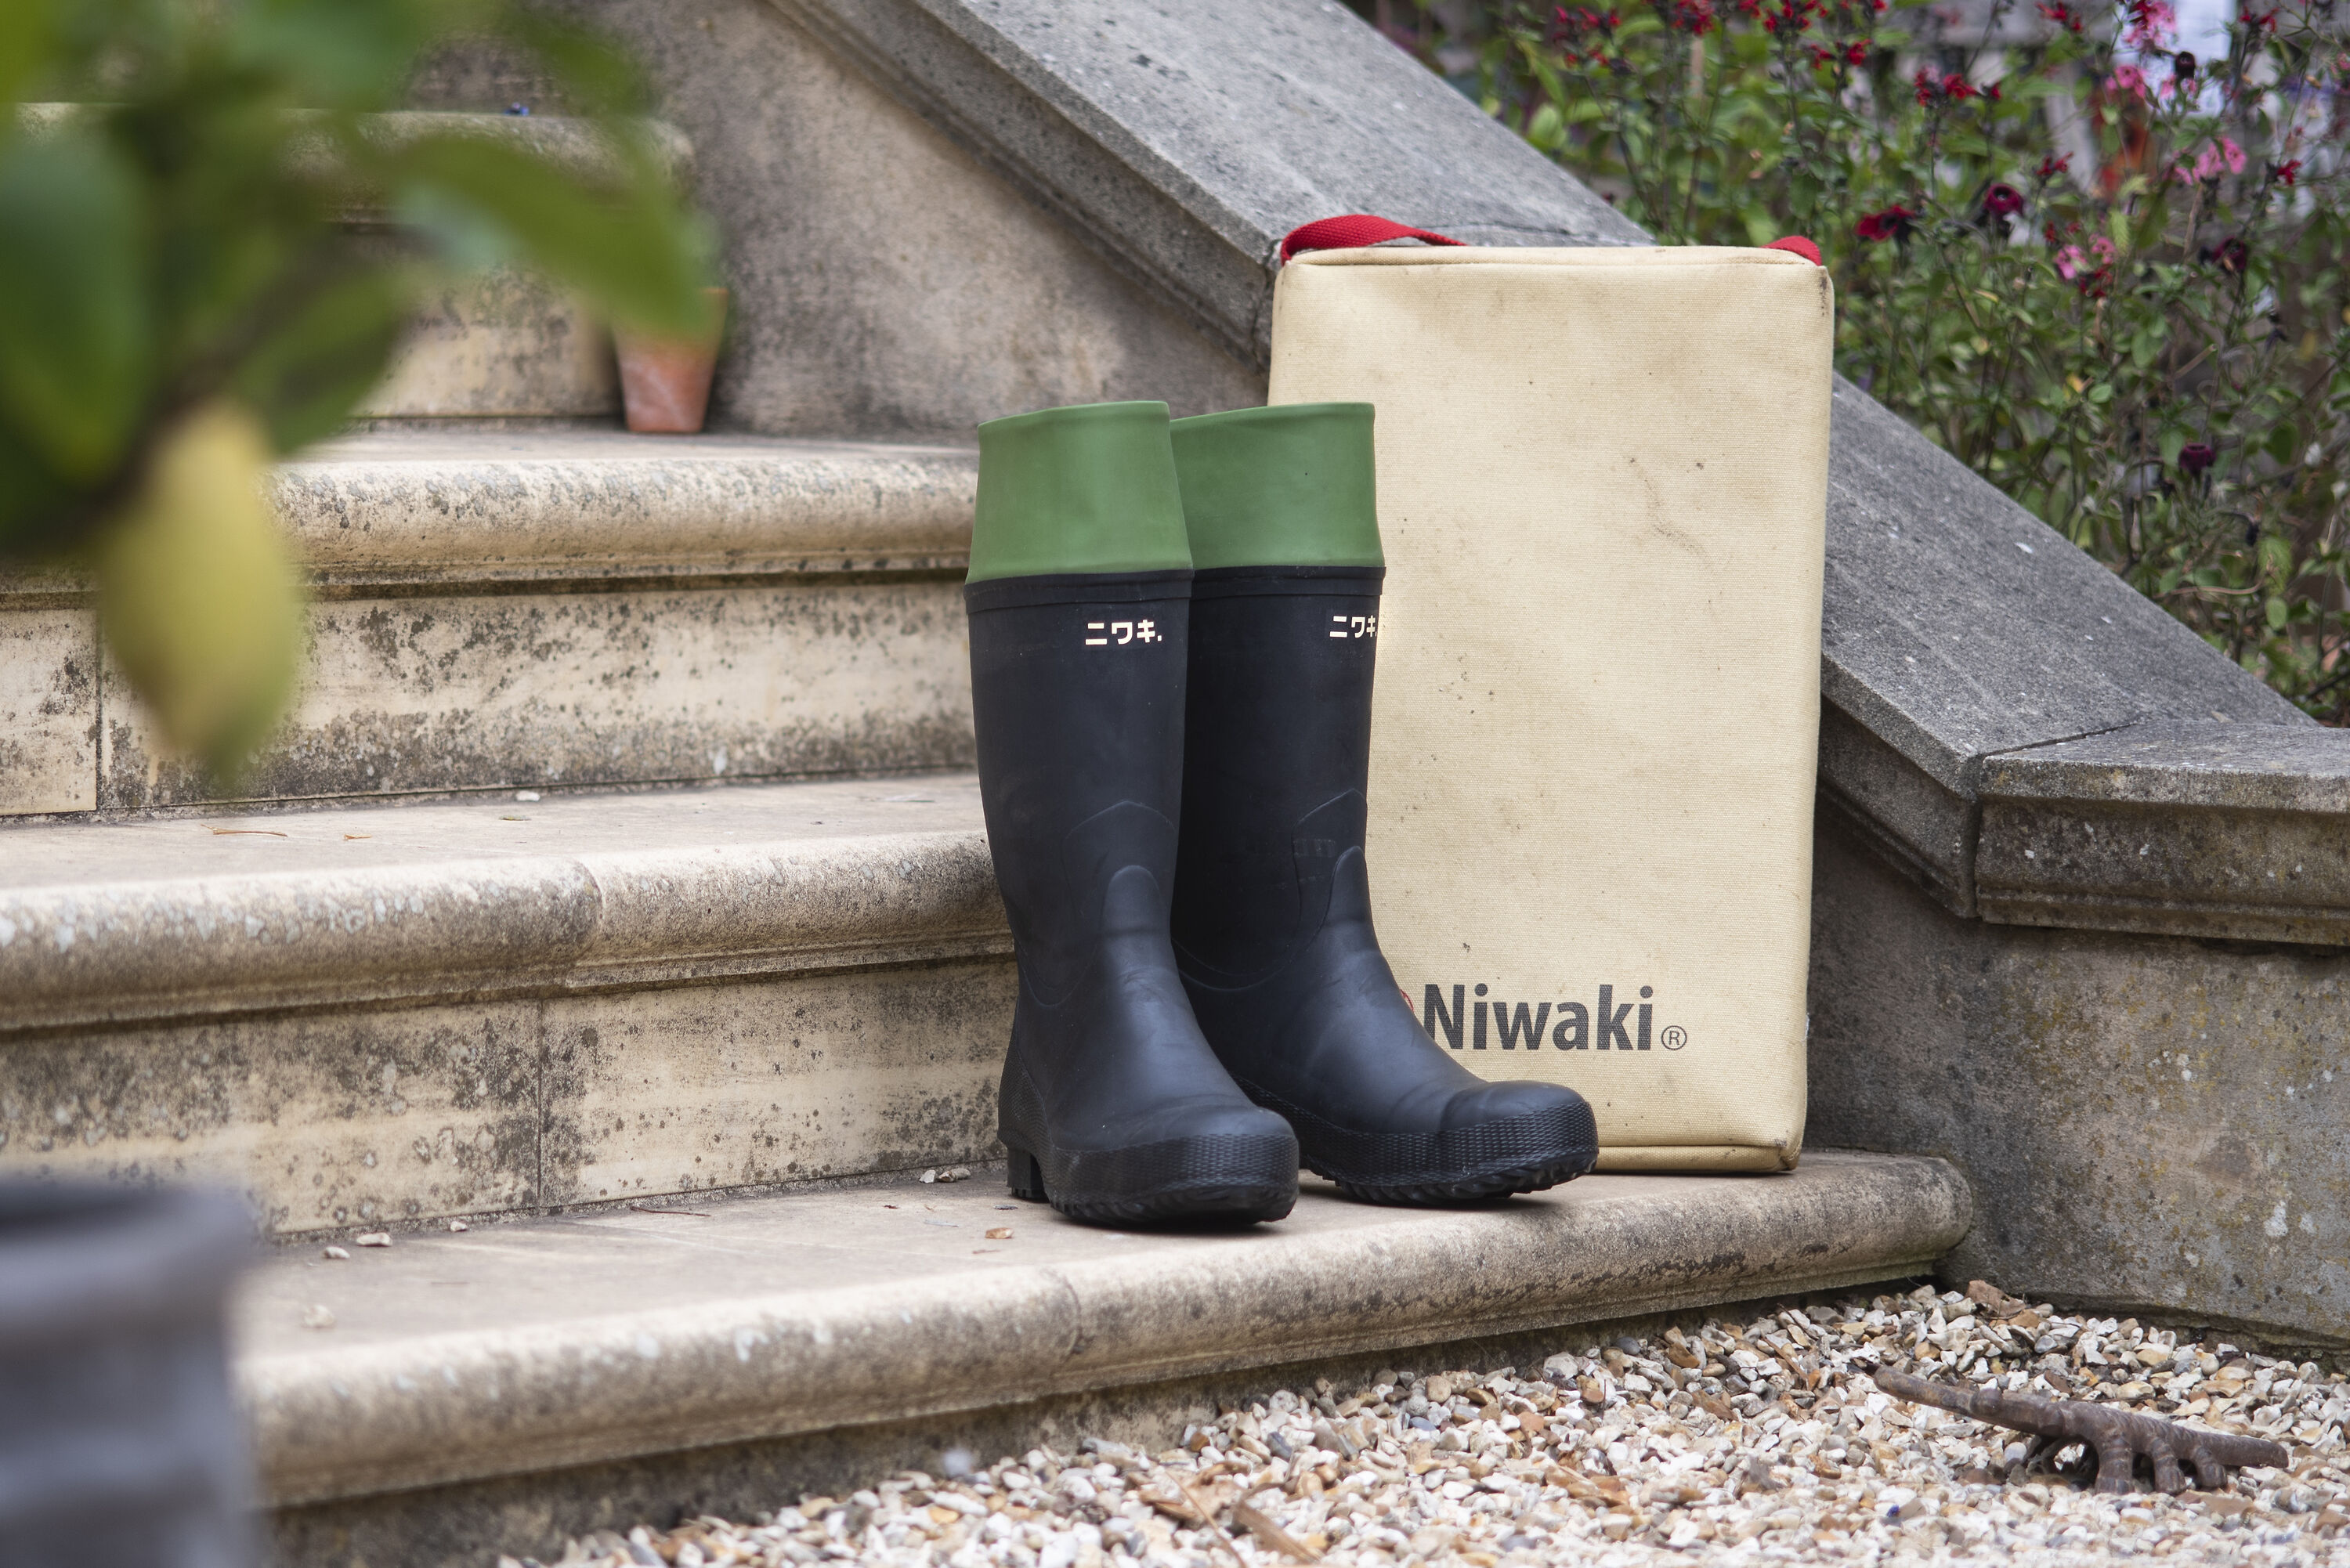 Niwaki Rubber Boots